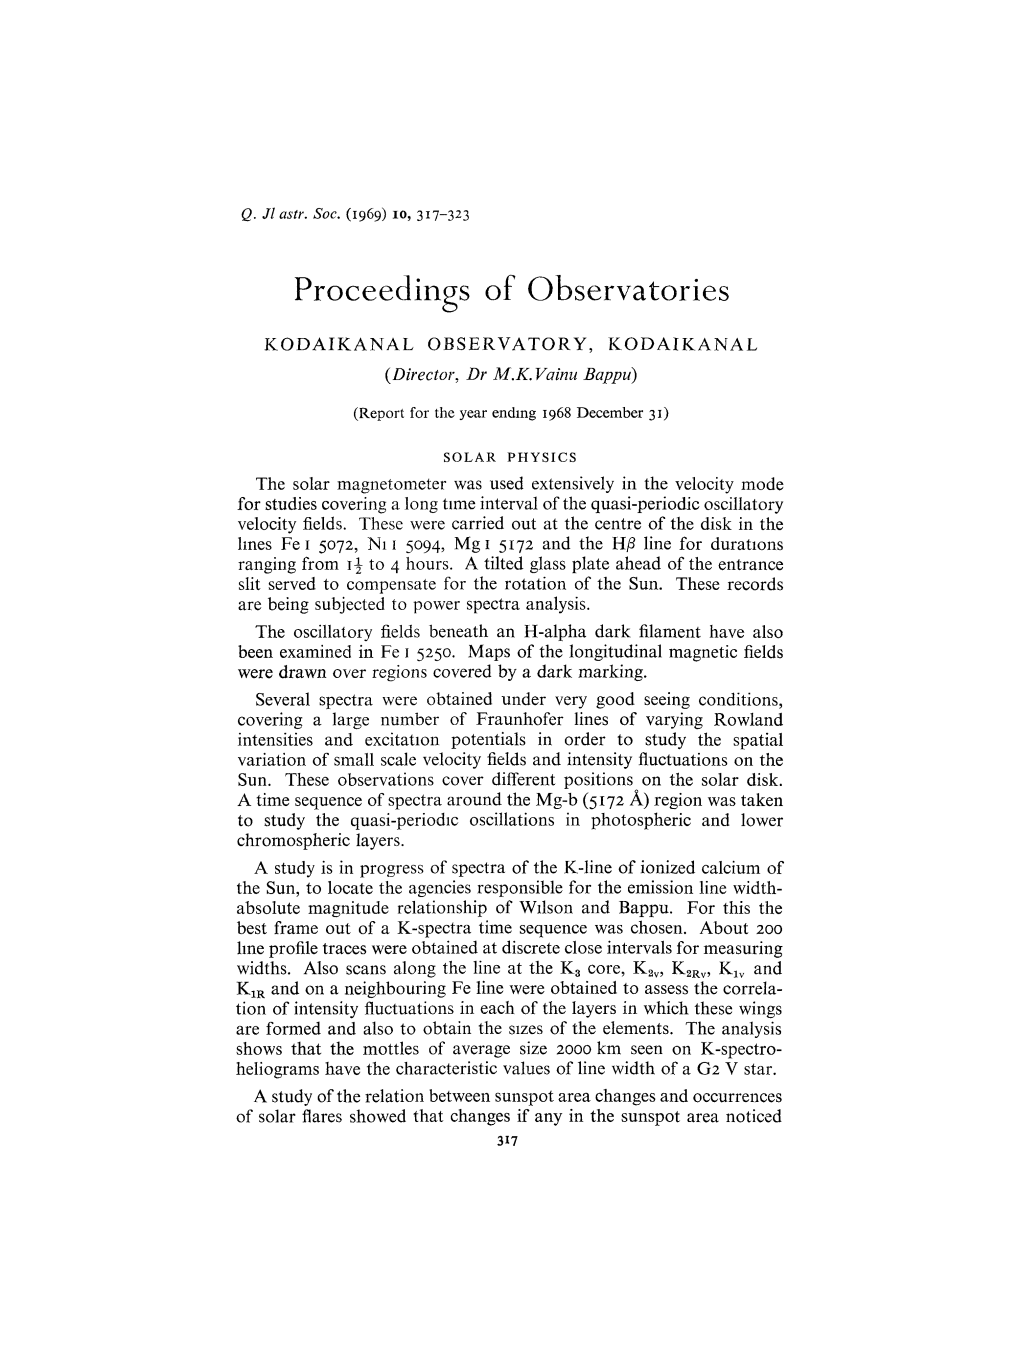 Proceedings of Observatories